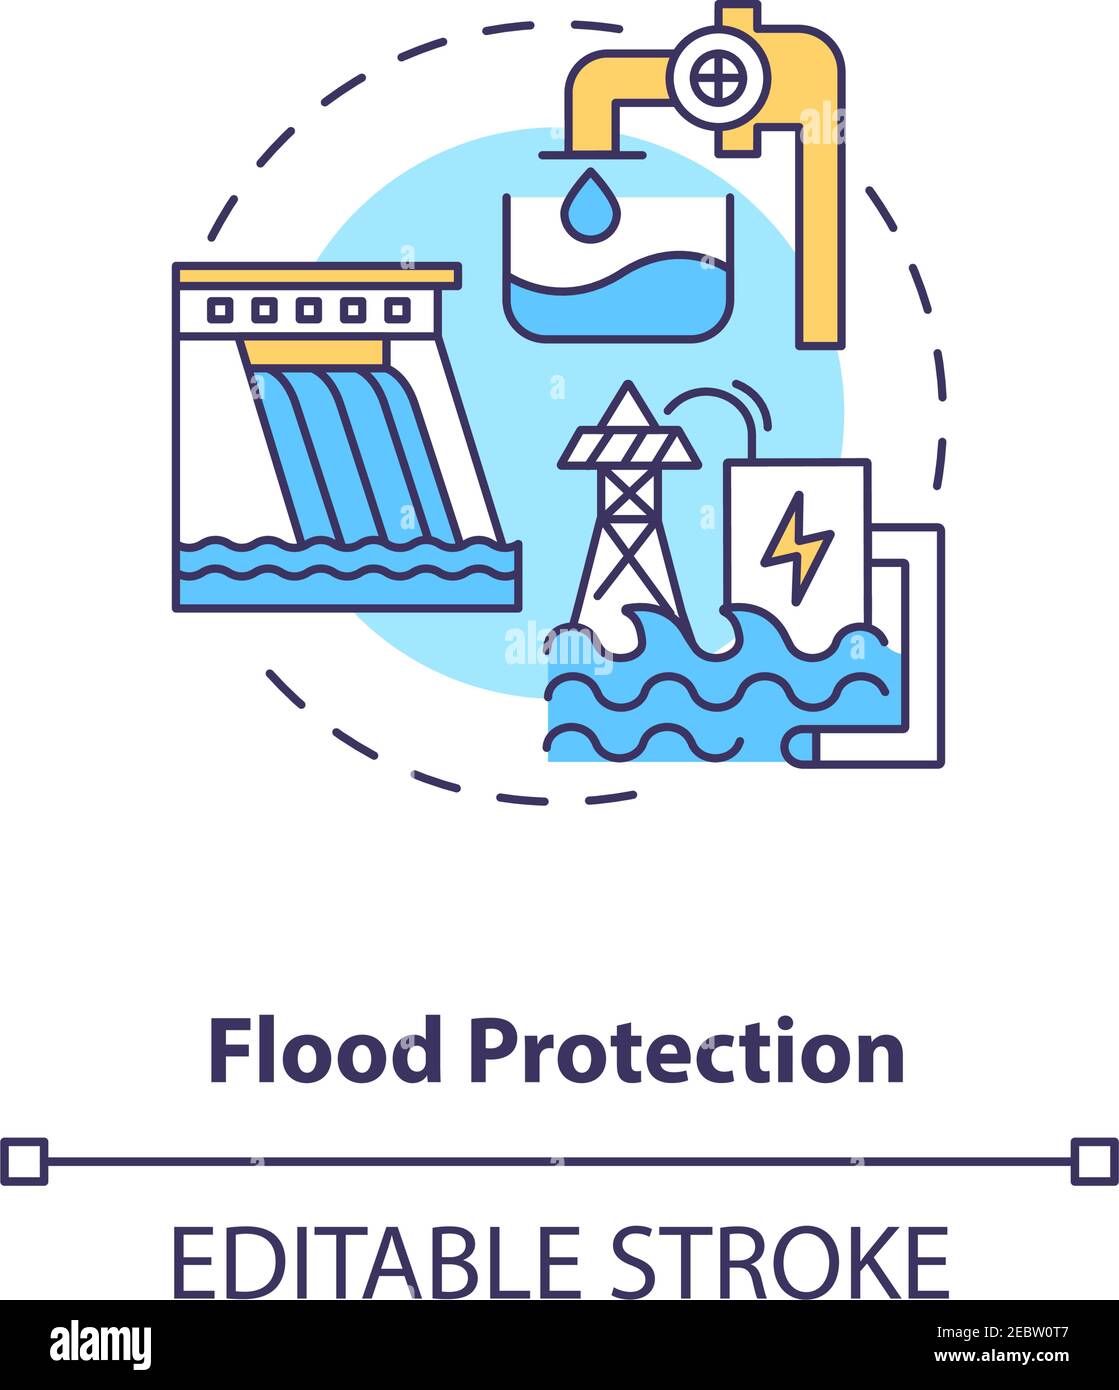 Flood protection concept icon Stock Vector